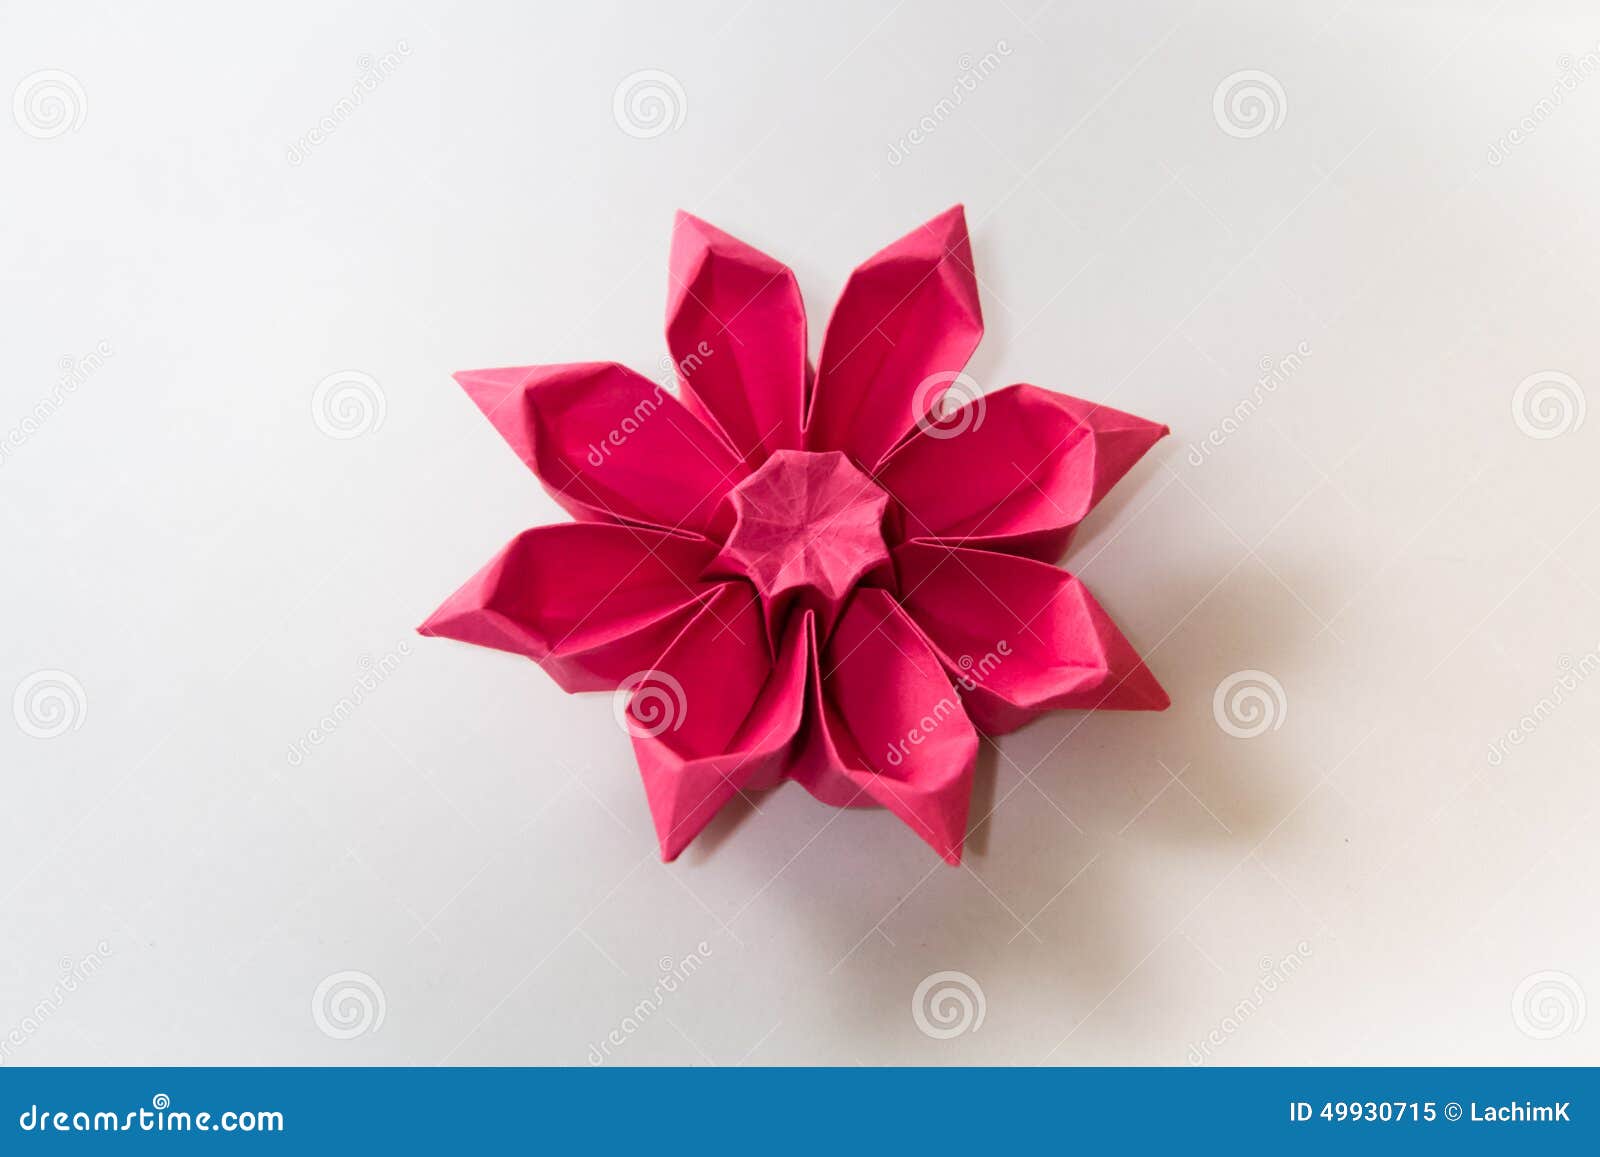 origami gerbera flower